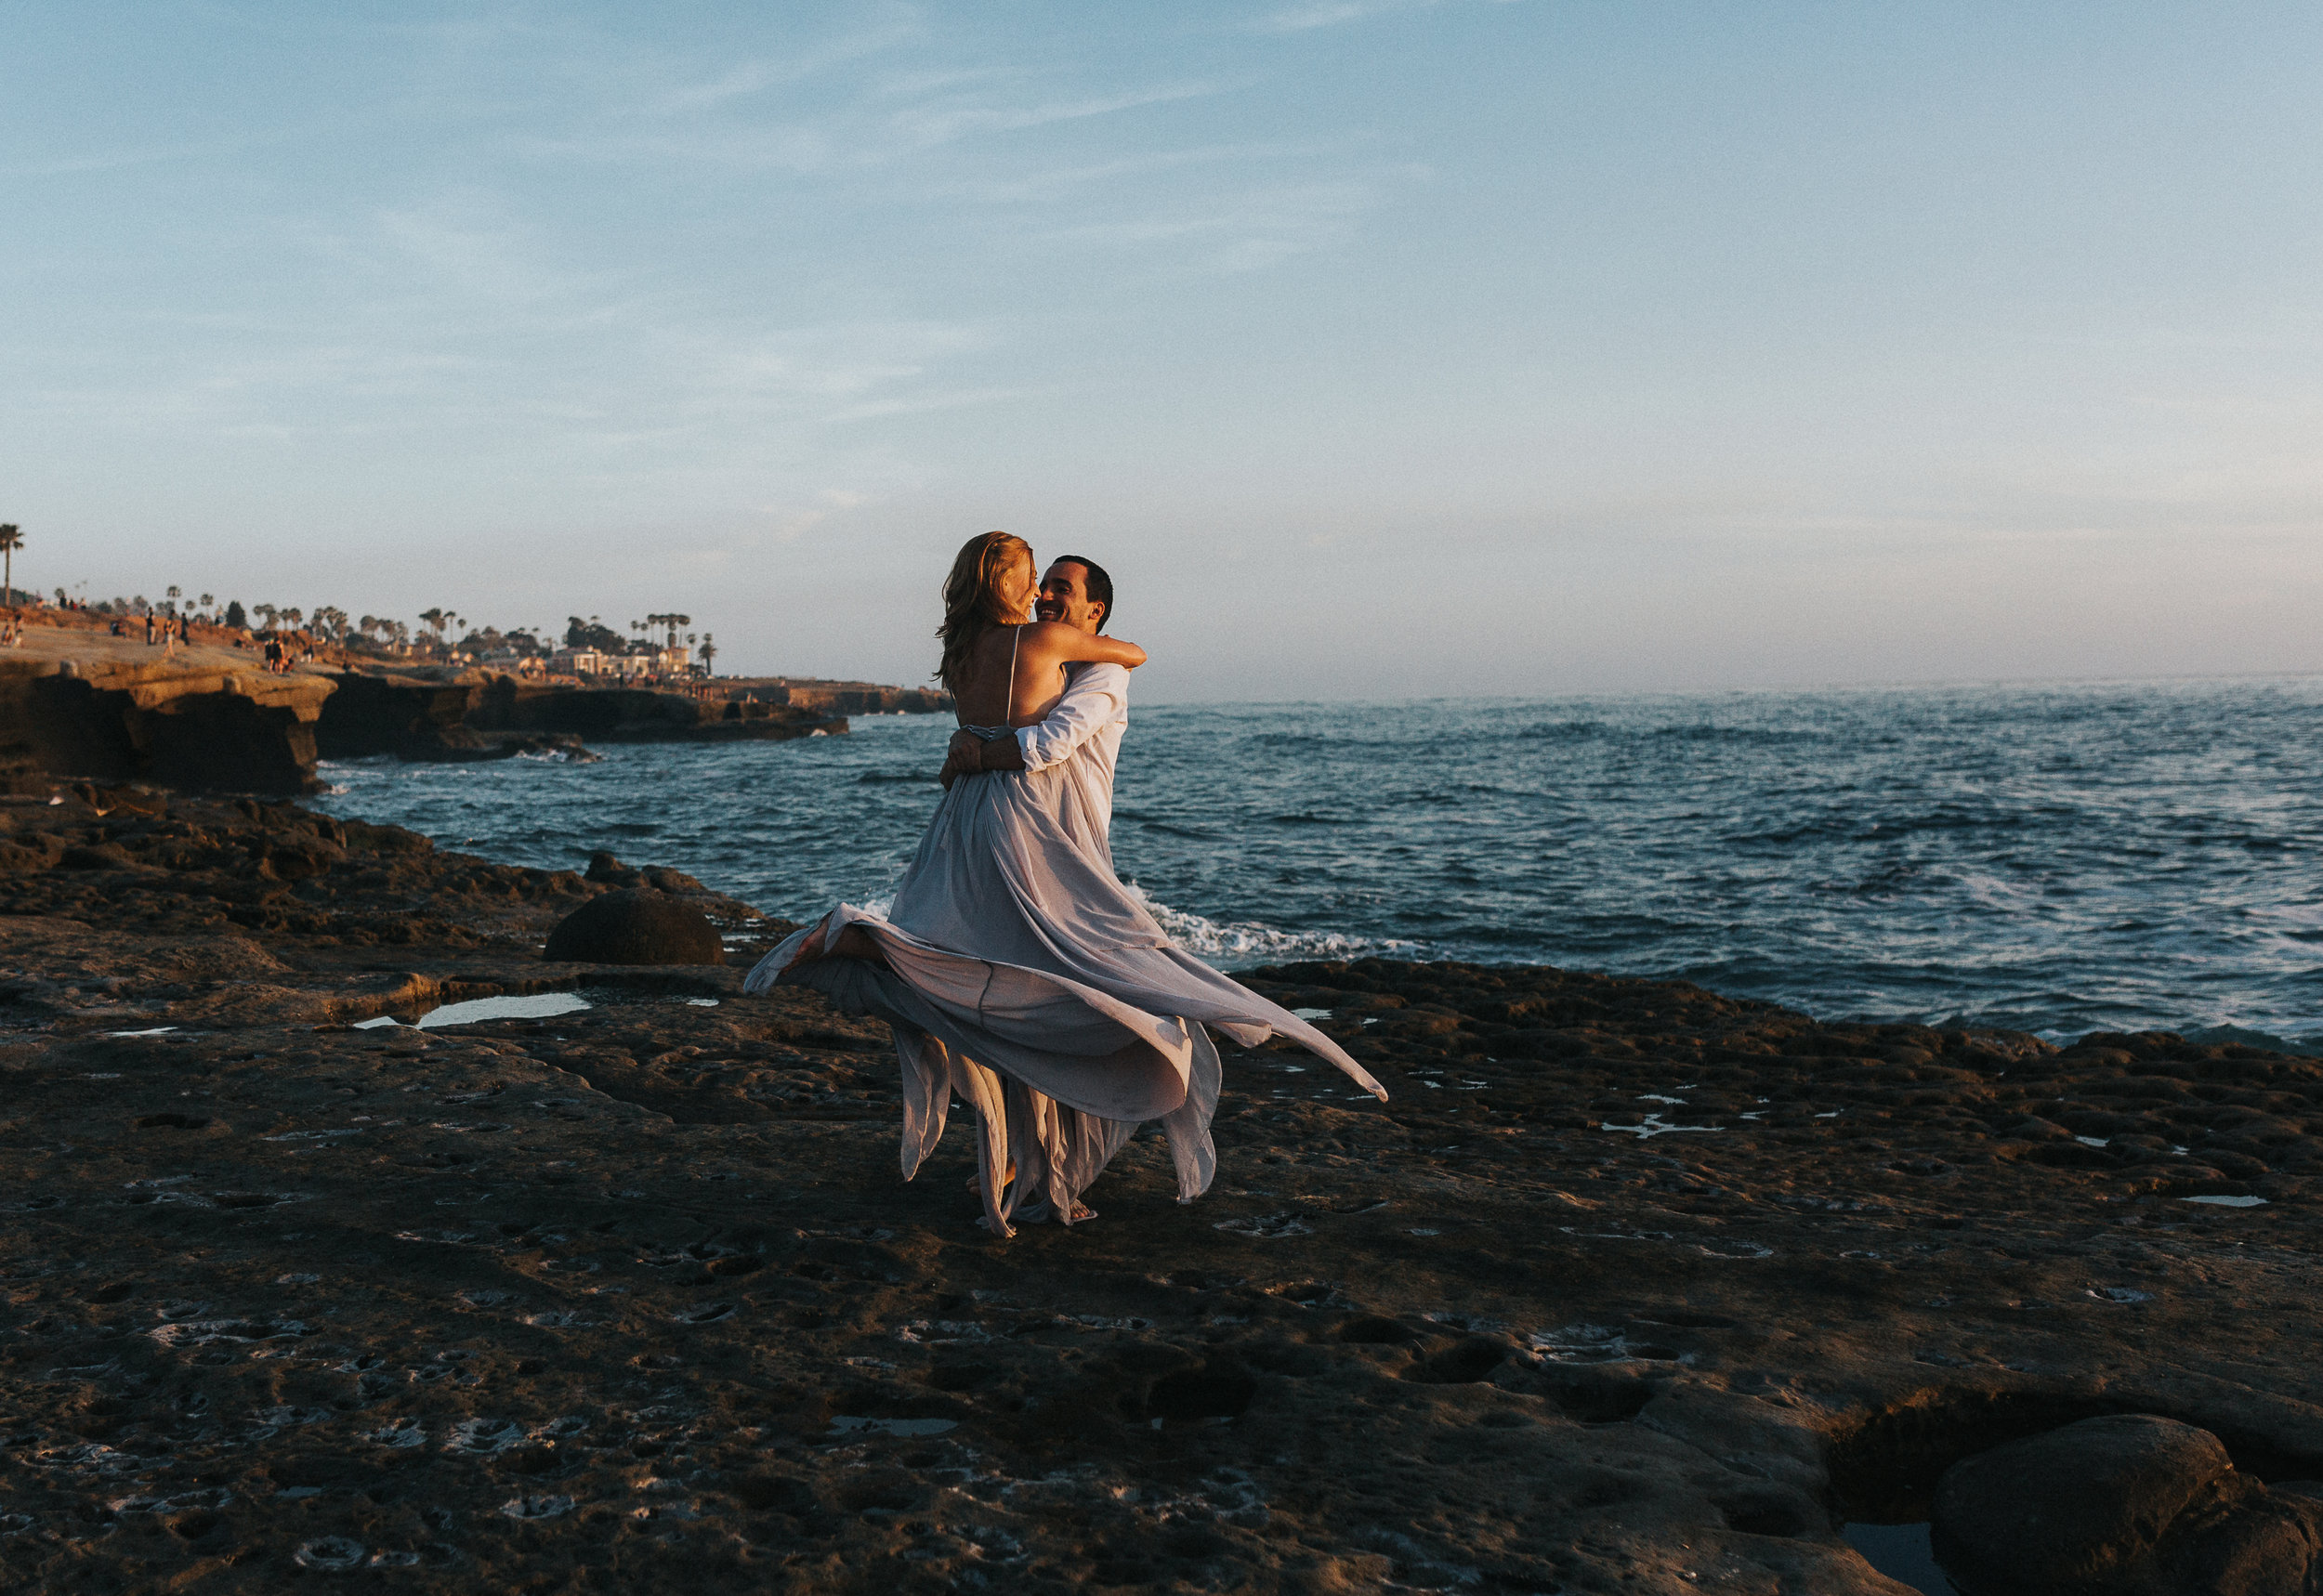 Sunset Cliffs San Diego Beach Engagement Photos - The Overwhelmed Bride Wedding Blog